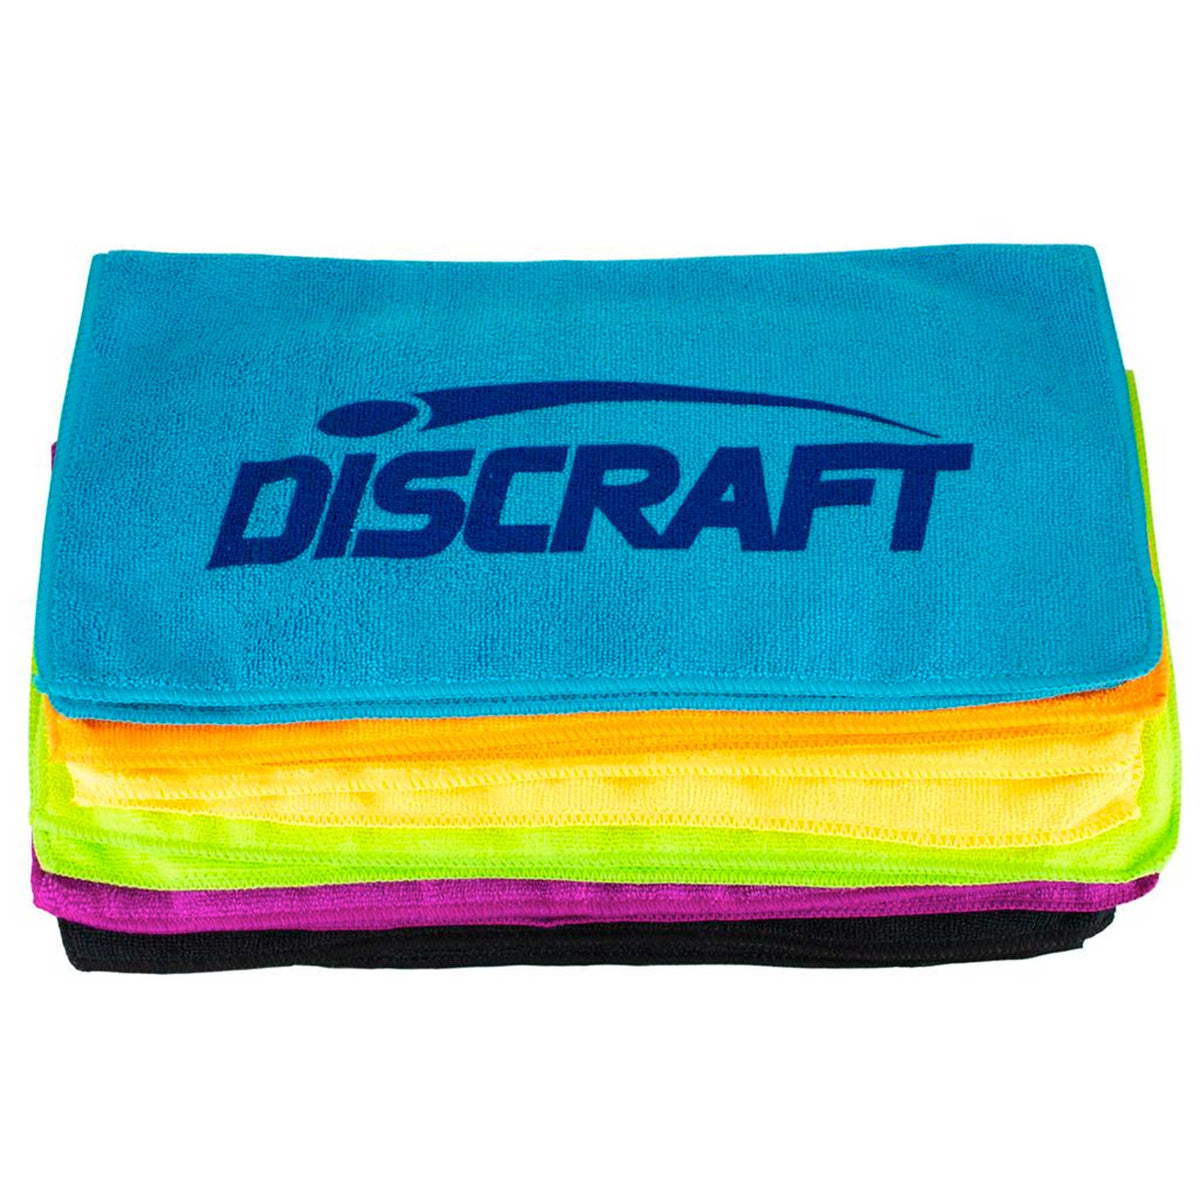 Discraft Disc Golf Microfiber towel blue